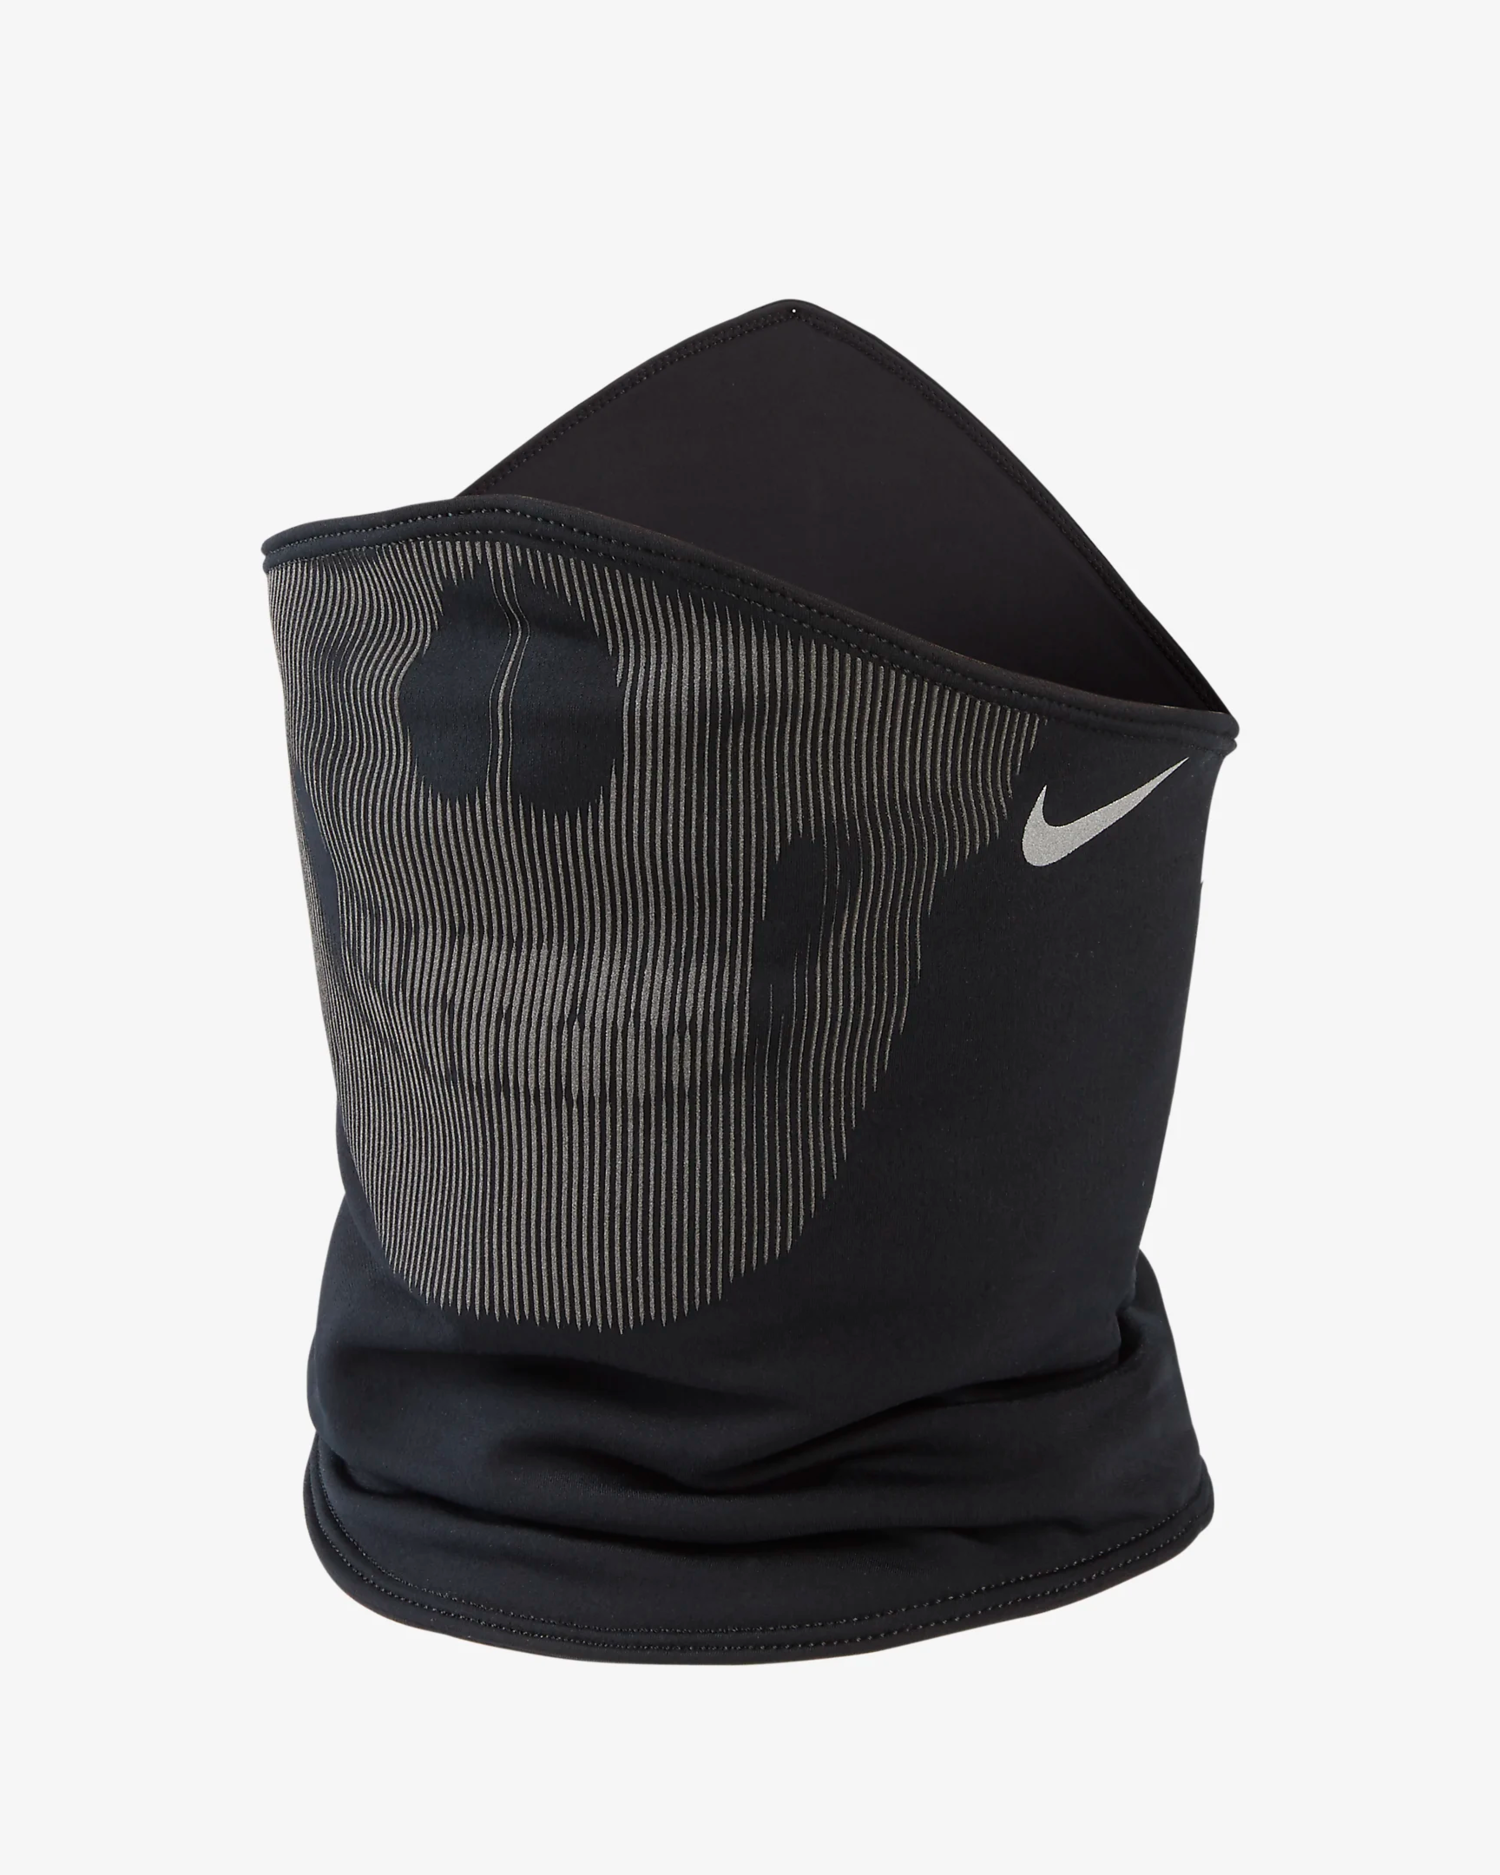 Restock: Nike Therma Sphere Skeleton Neck Warmer — Sneaker Shouts